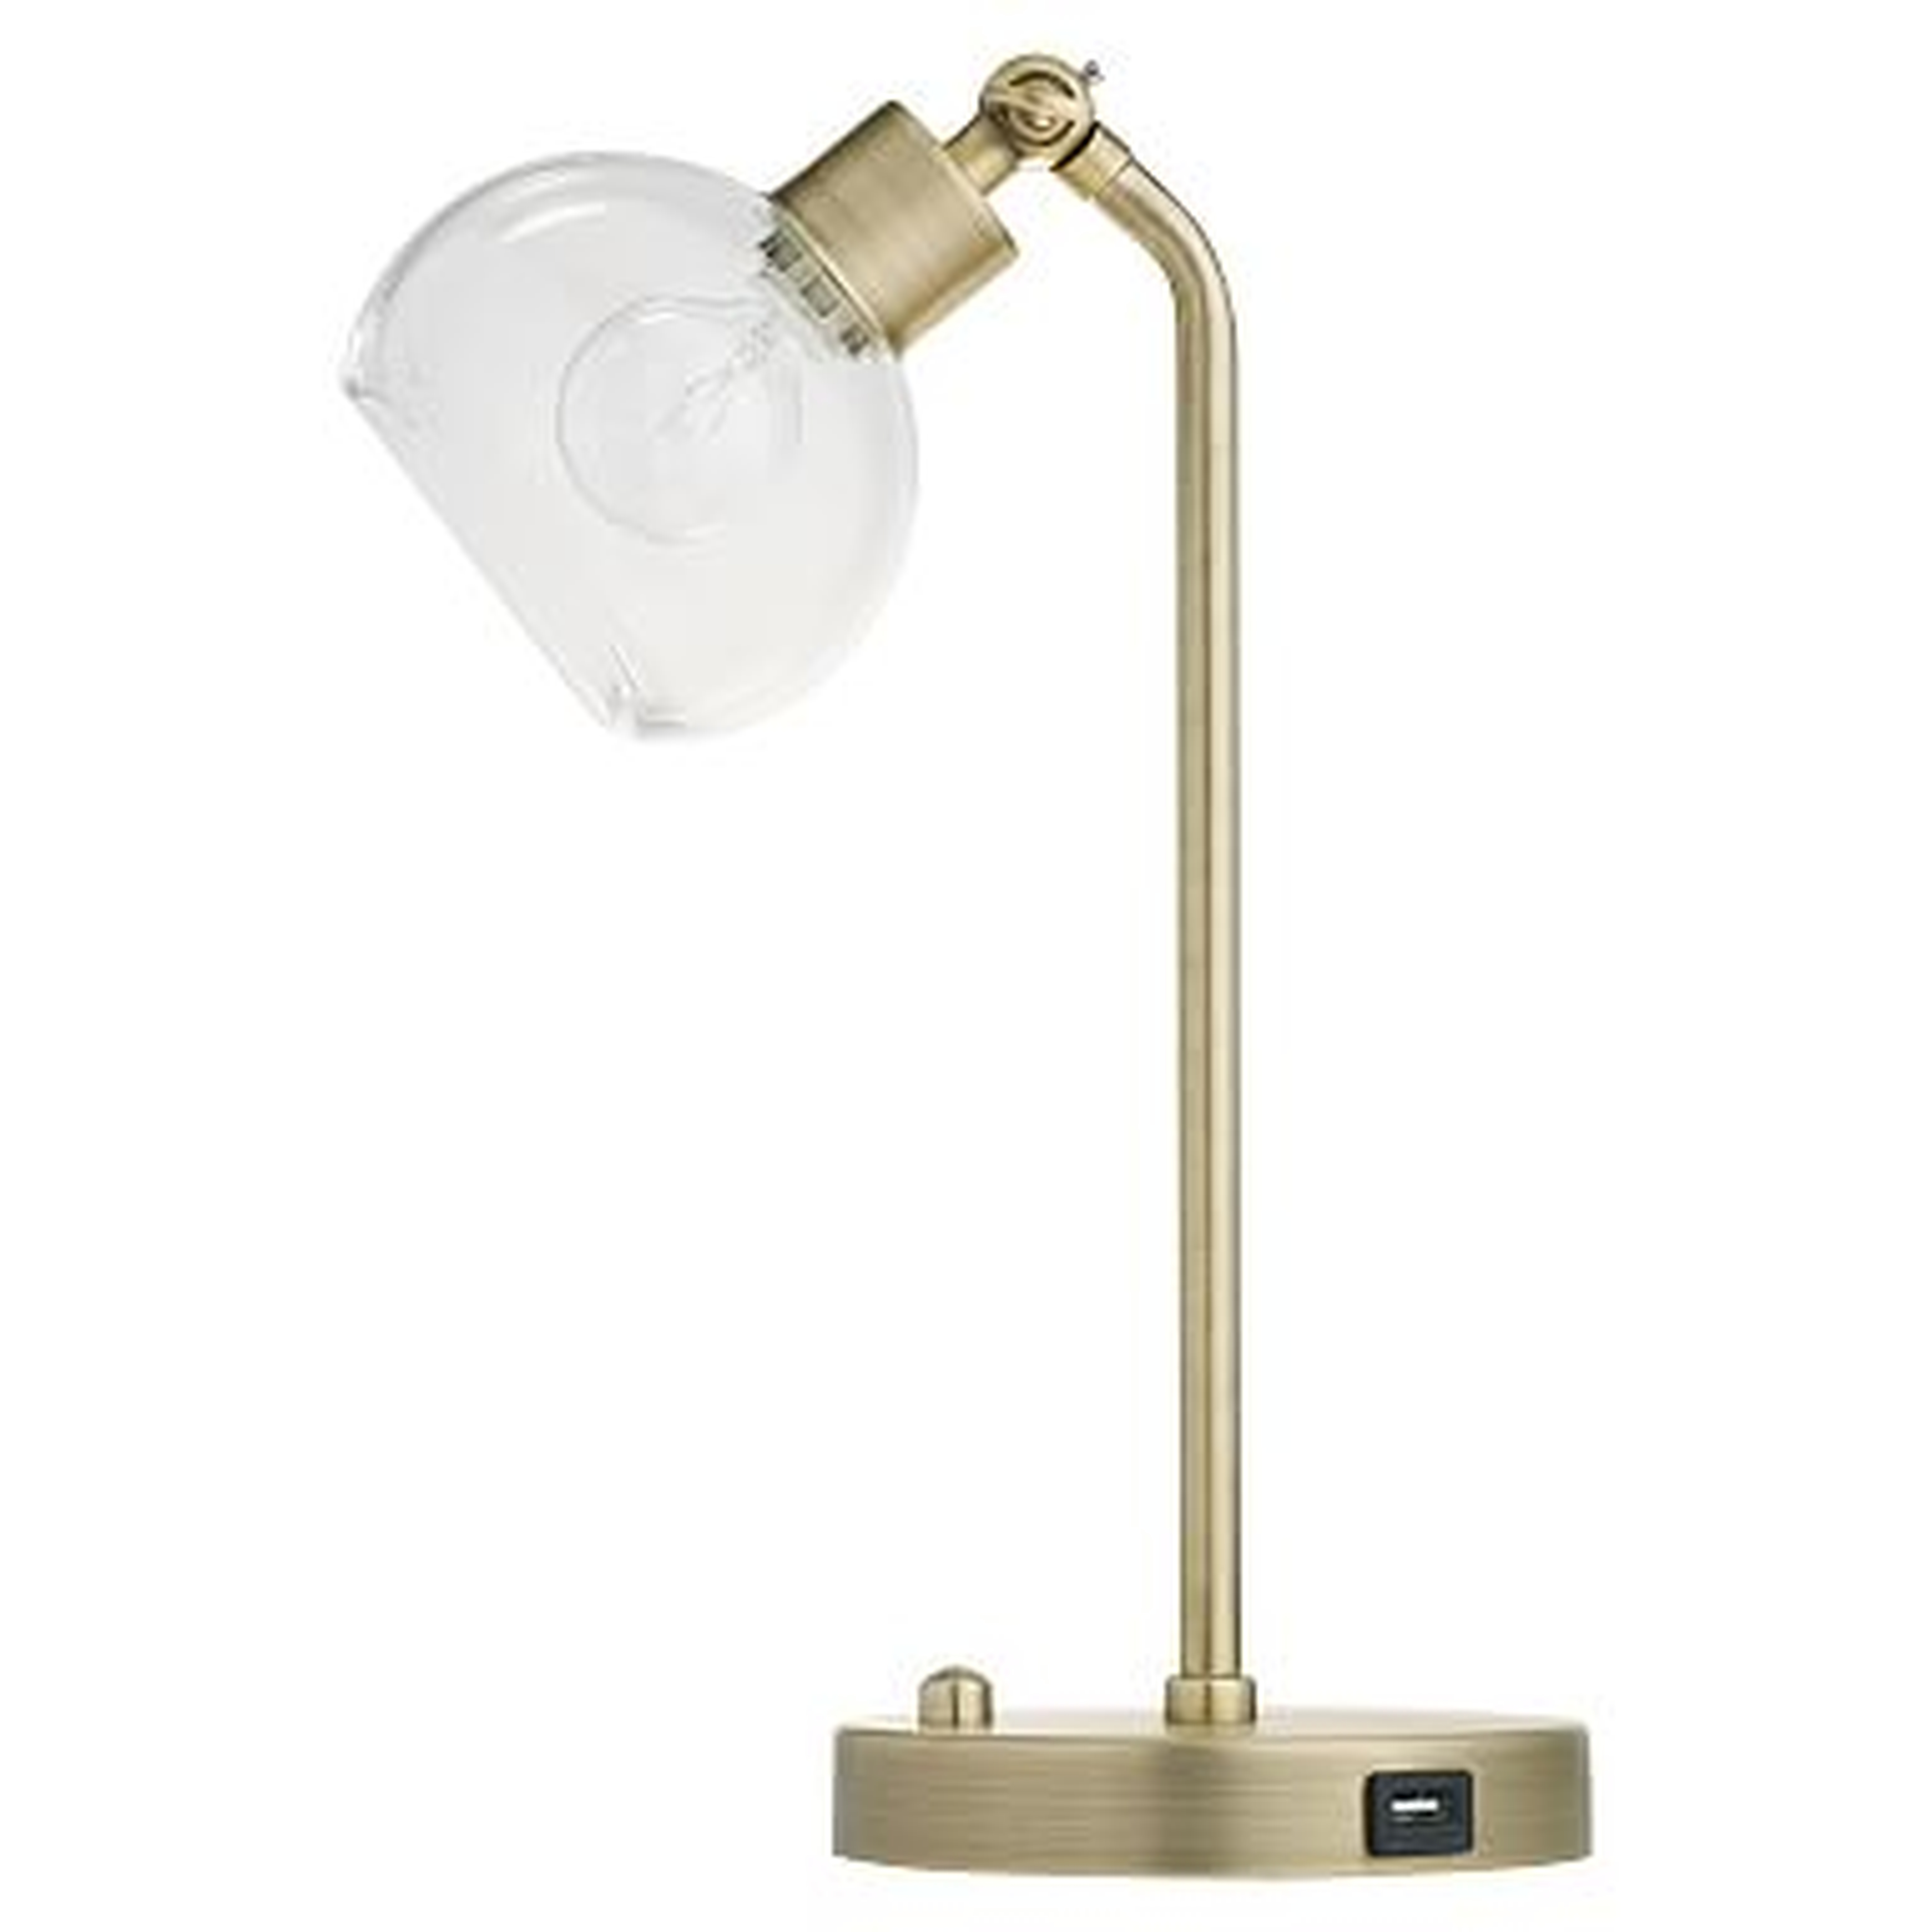 Spotlight Task Lamp with USB, Gold & Clear - Pottery Barn Teen